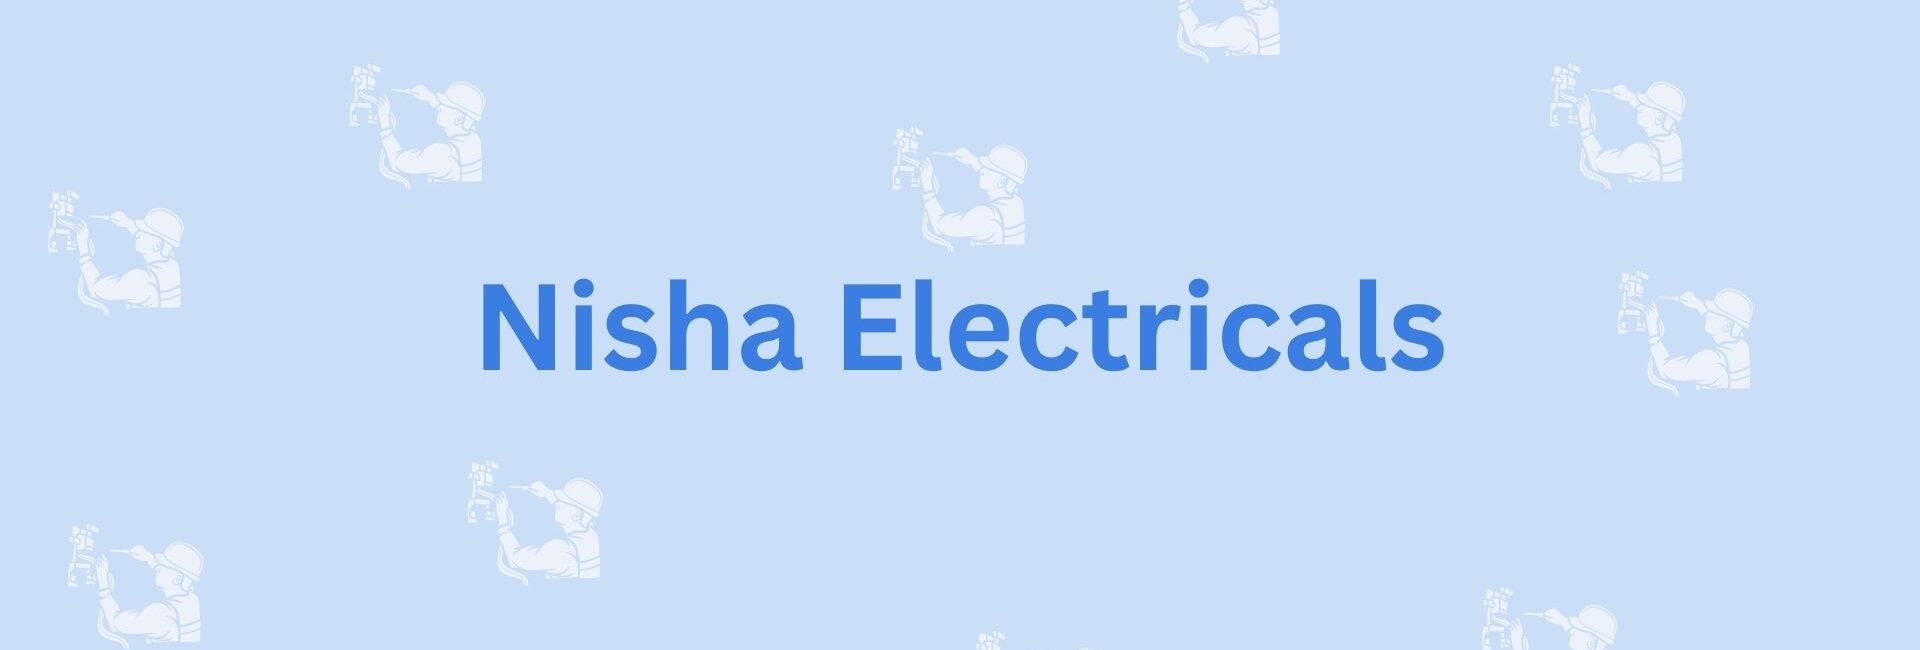 Nisha Electricals- Electrical Emergencies in Noida